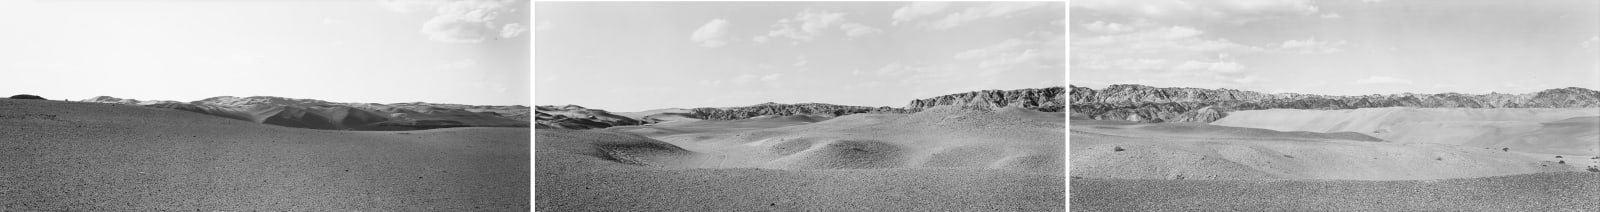 Lois Conner, From Mogao Ku, looking towards Sanwei Shan, across the desert, 1991